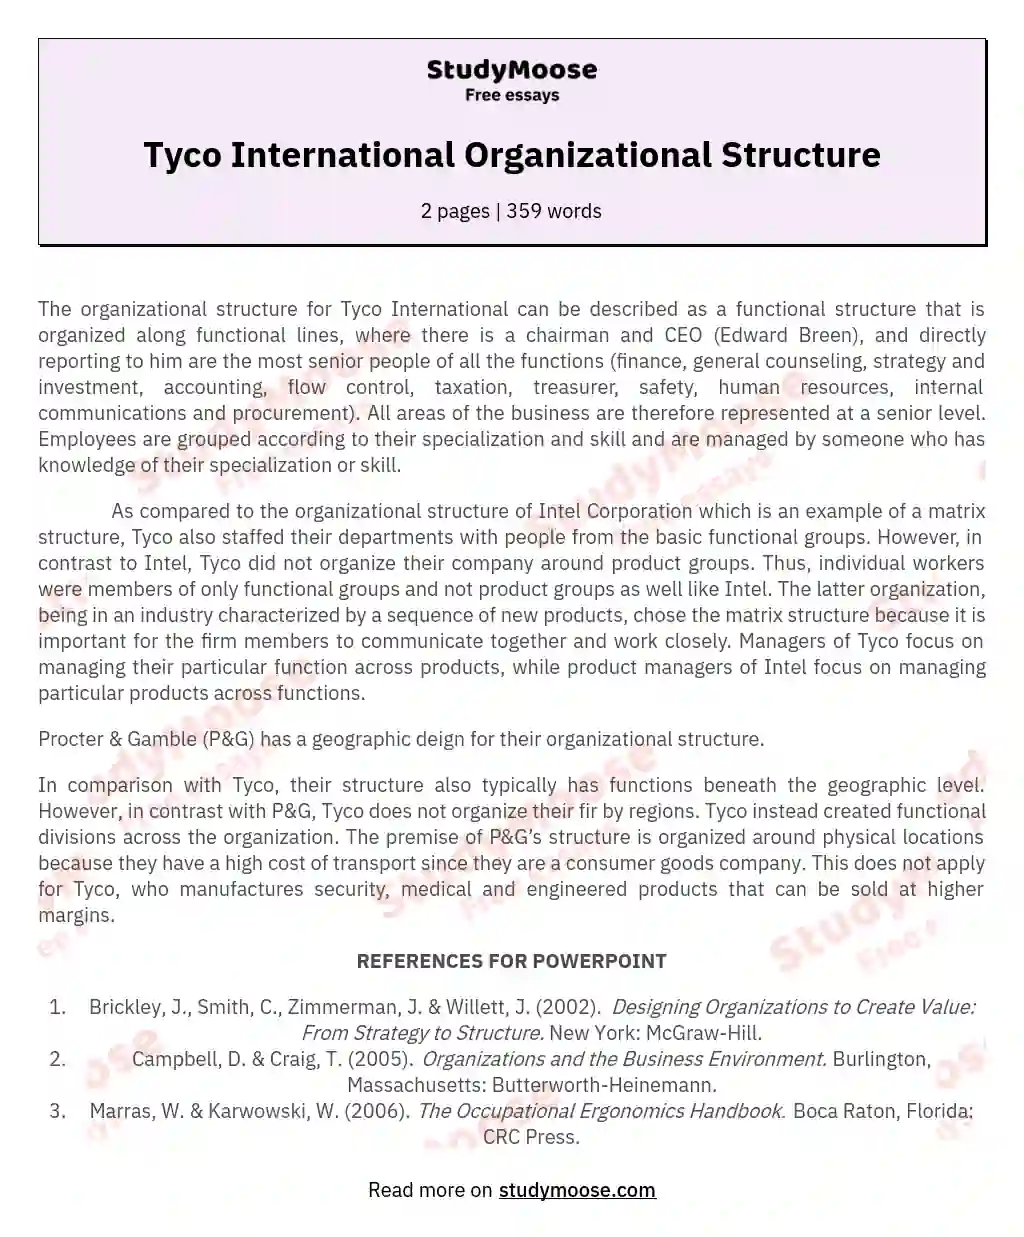 Tyco International Organizational Structure essay